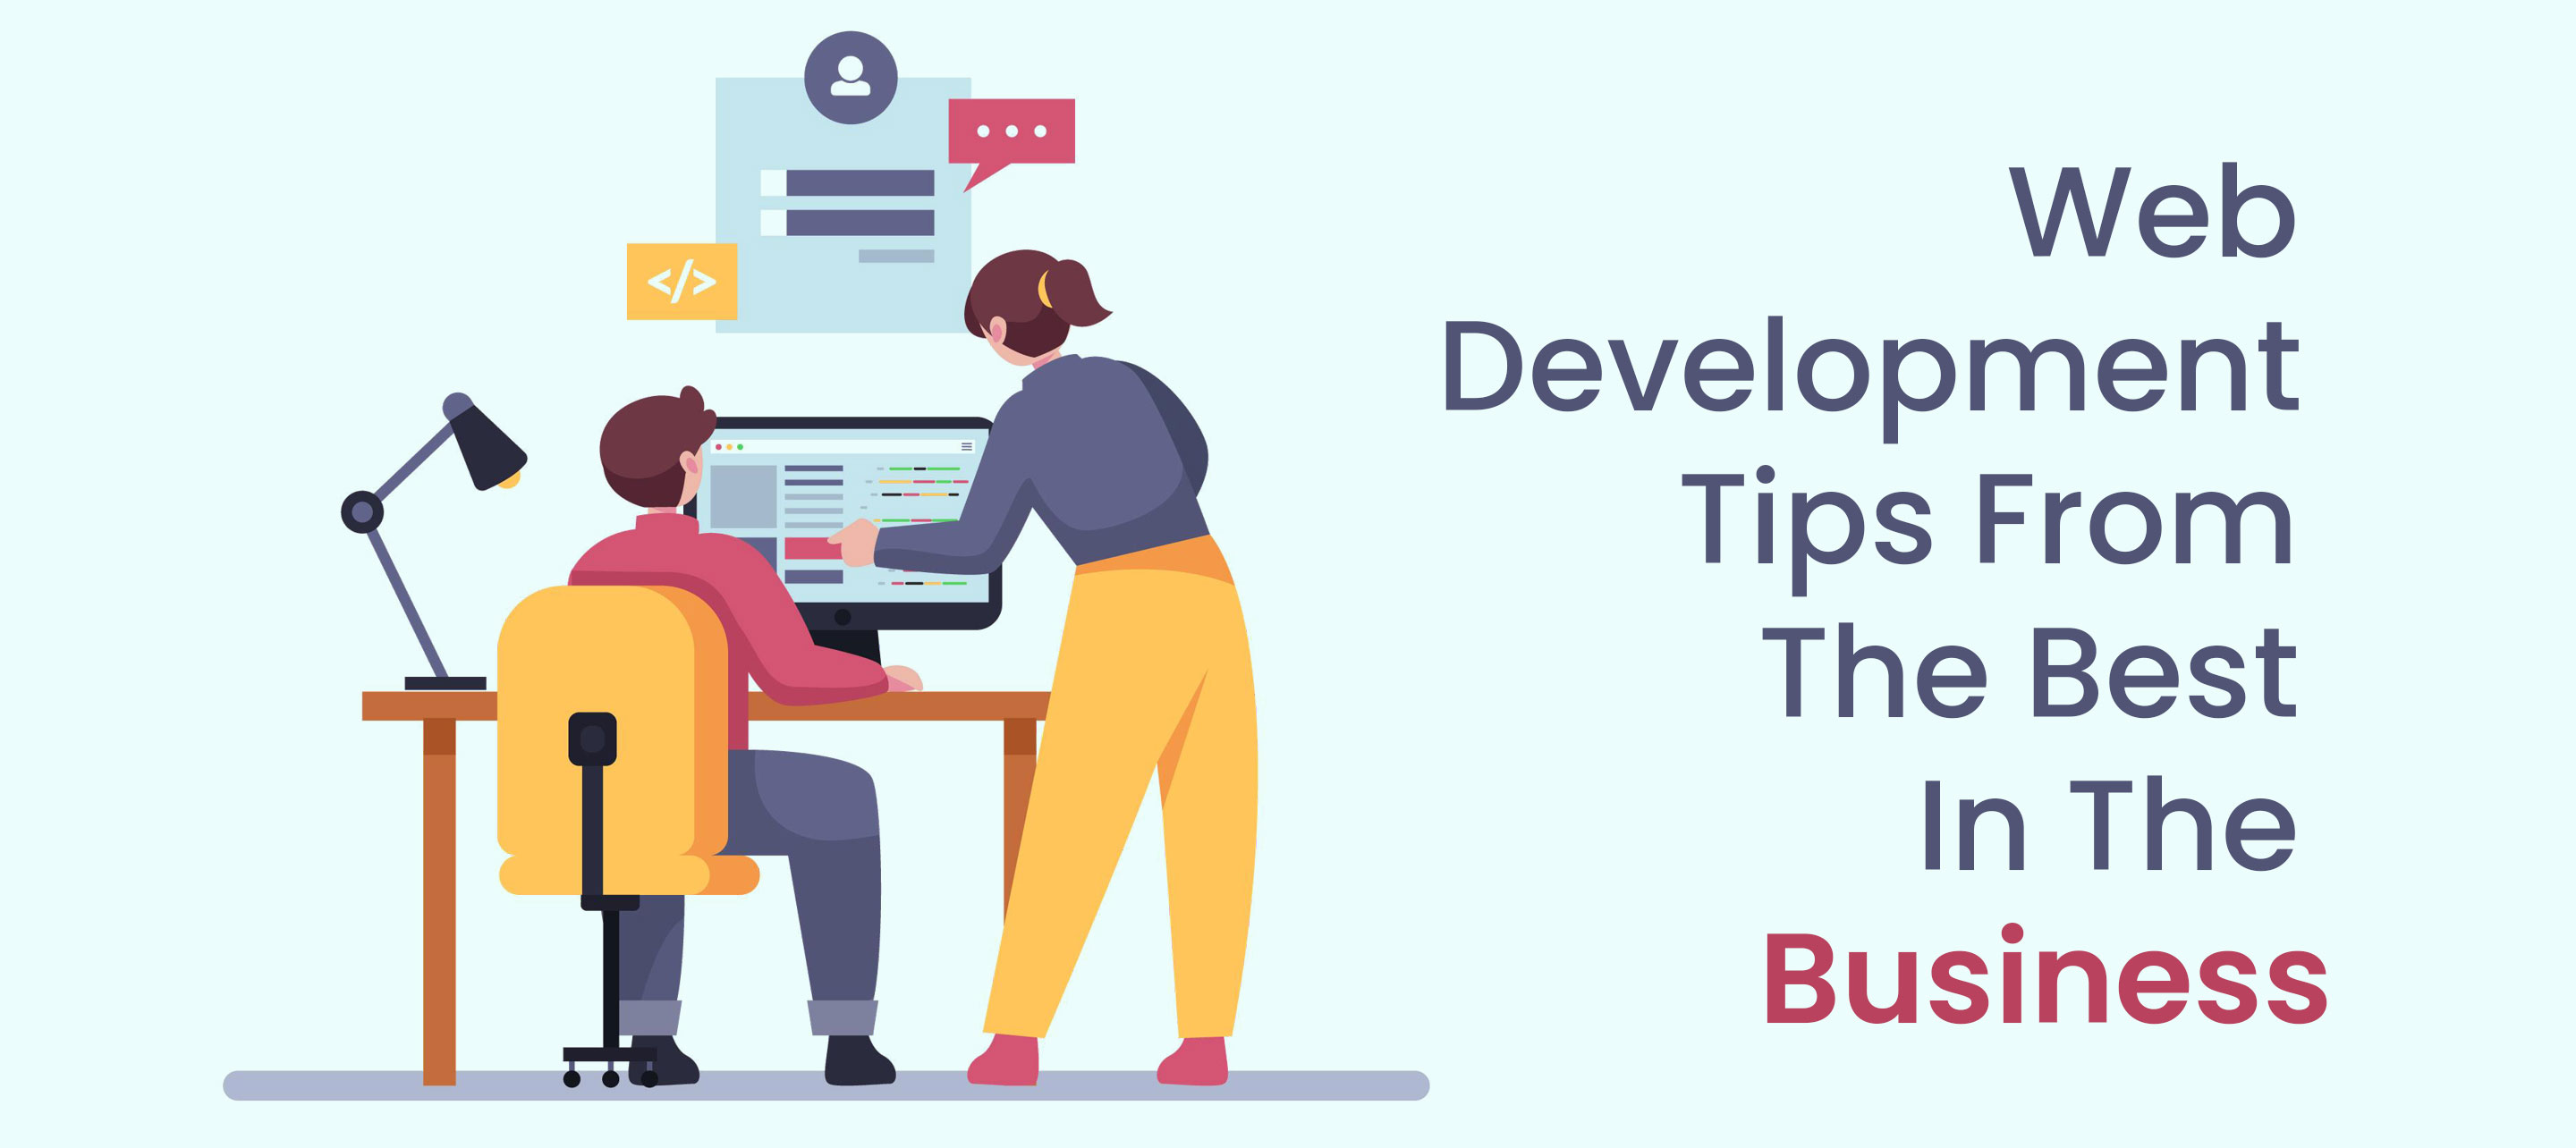 Web development tips